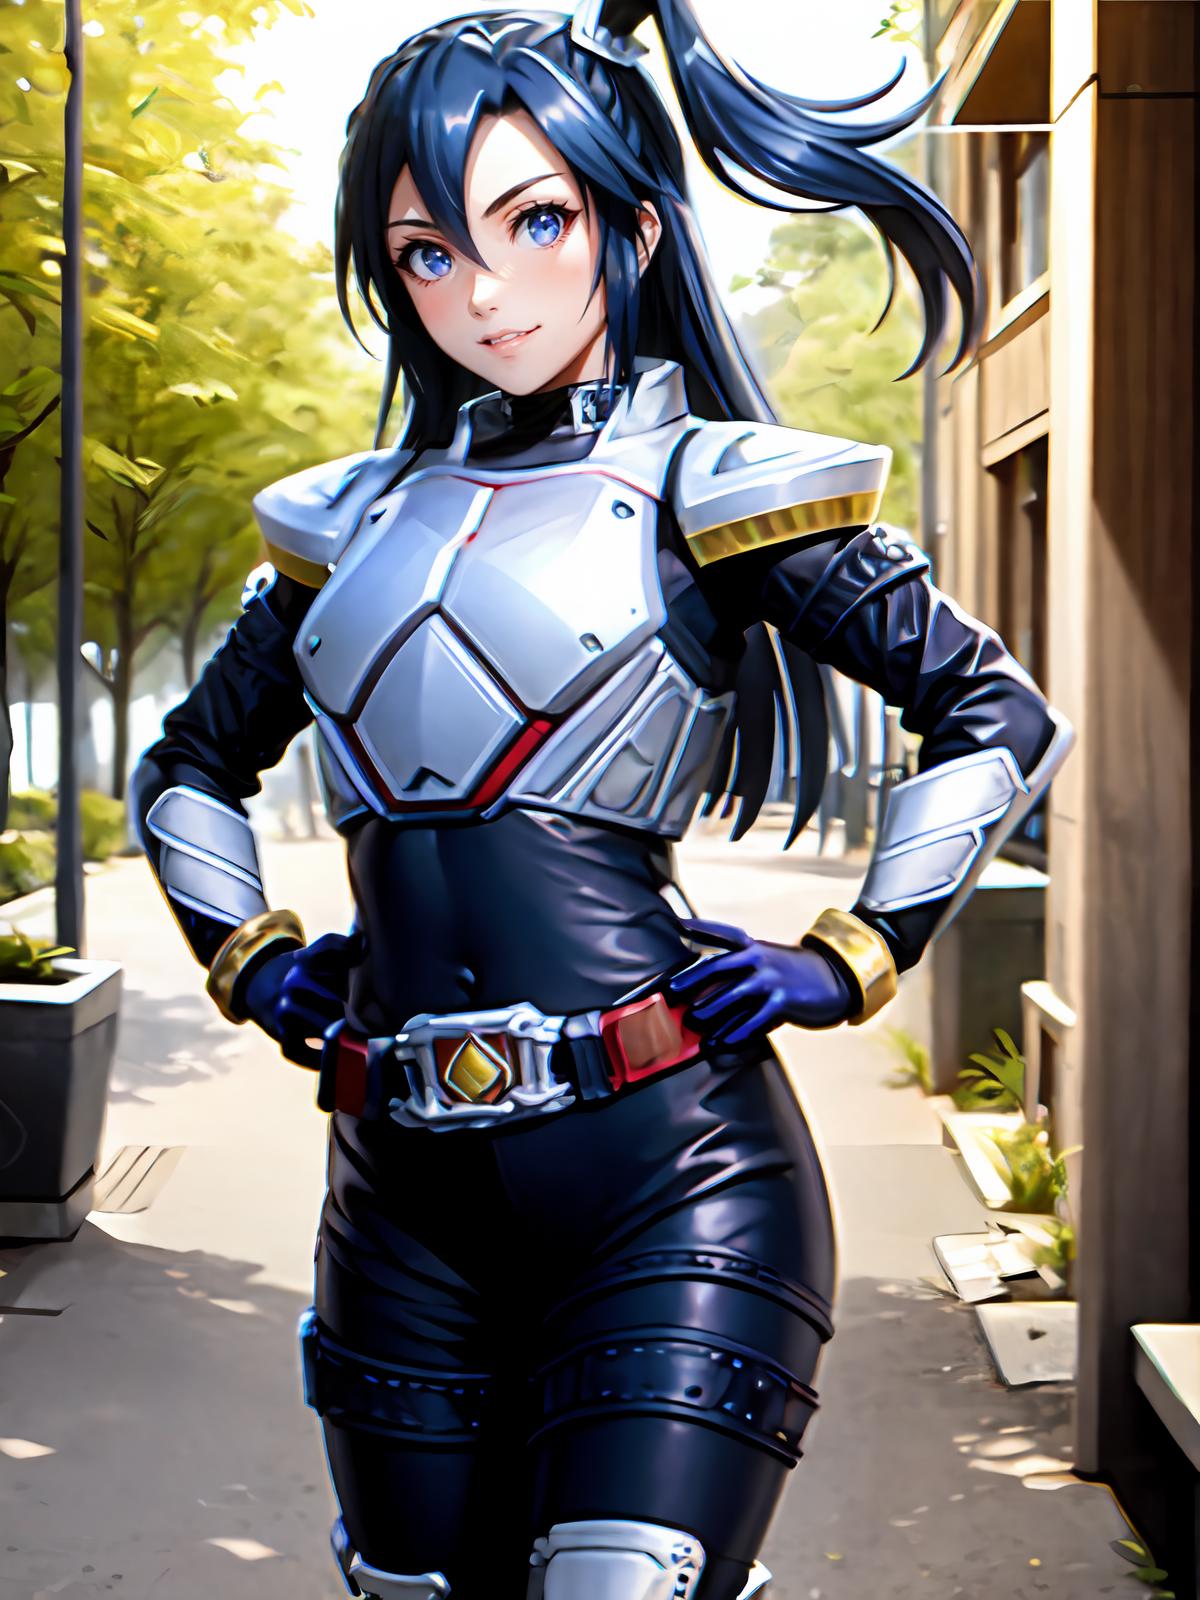 Kamen Rider Blade - Fleixble Suit image by Chichiue_Pendragon